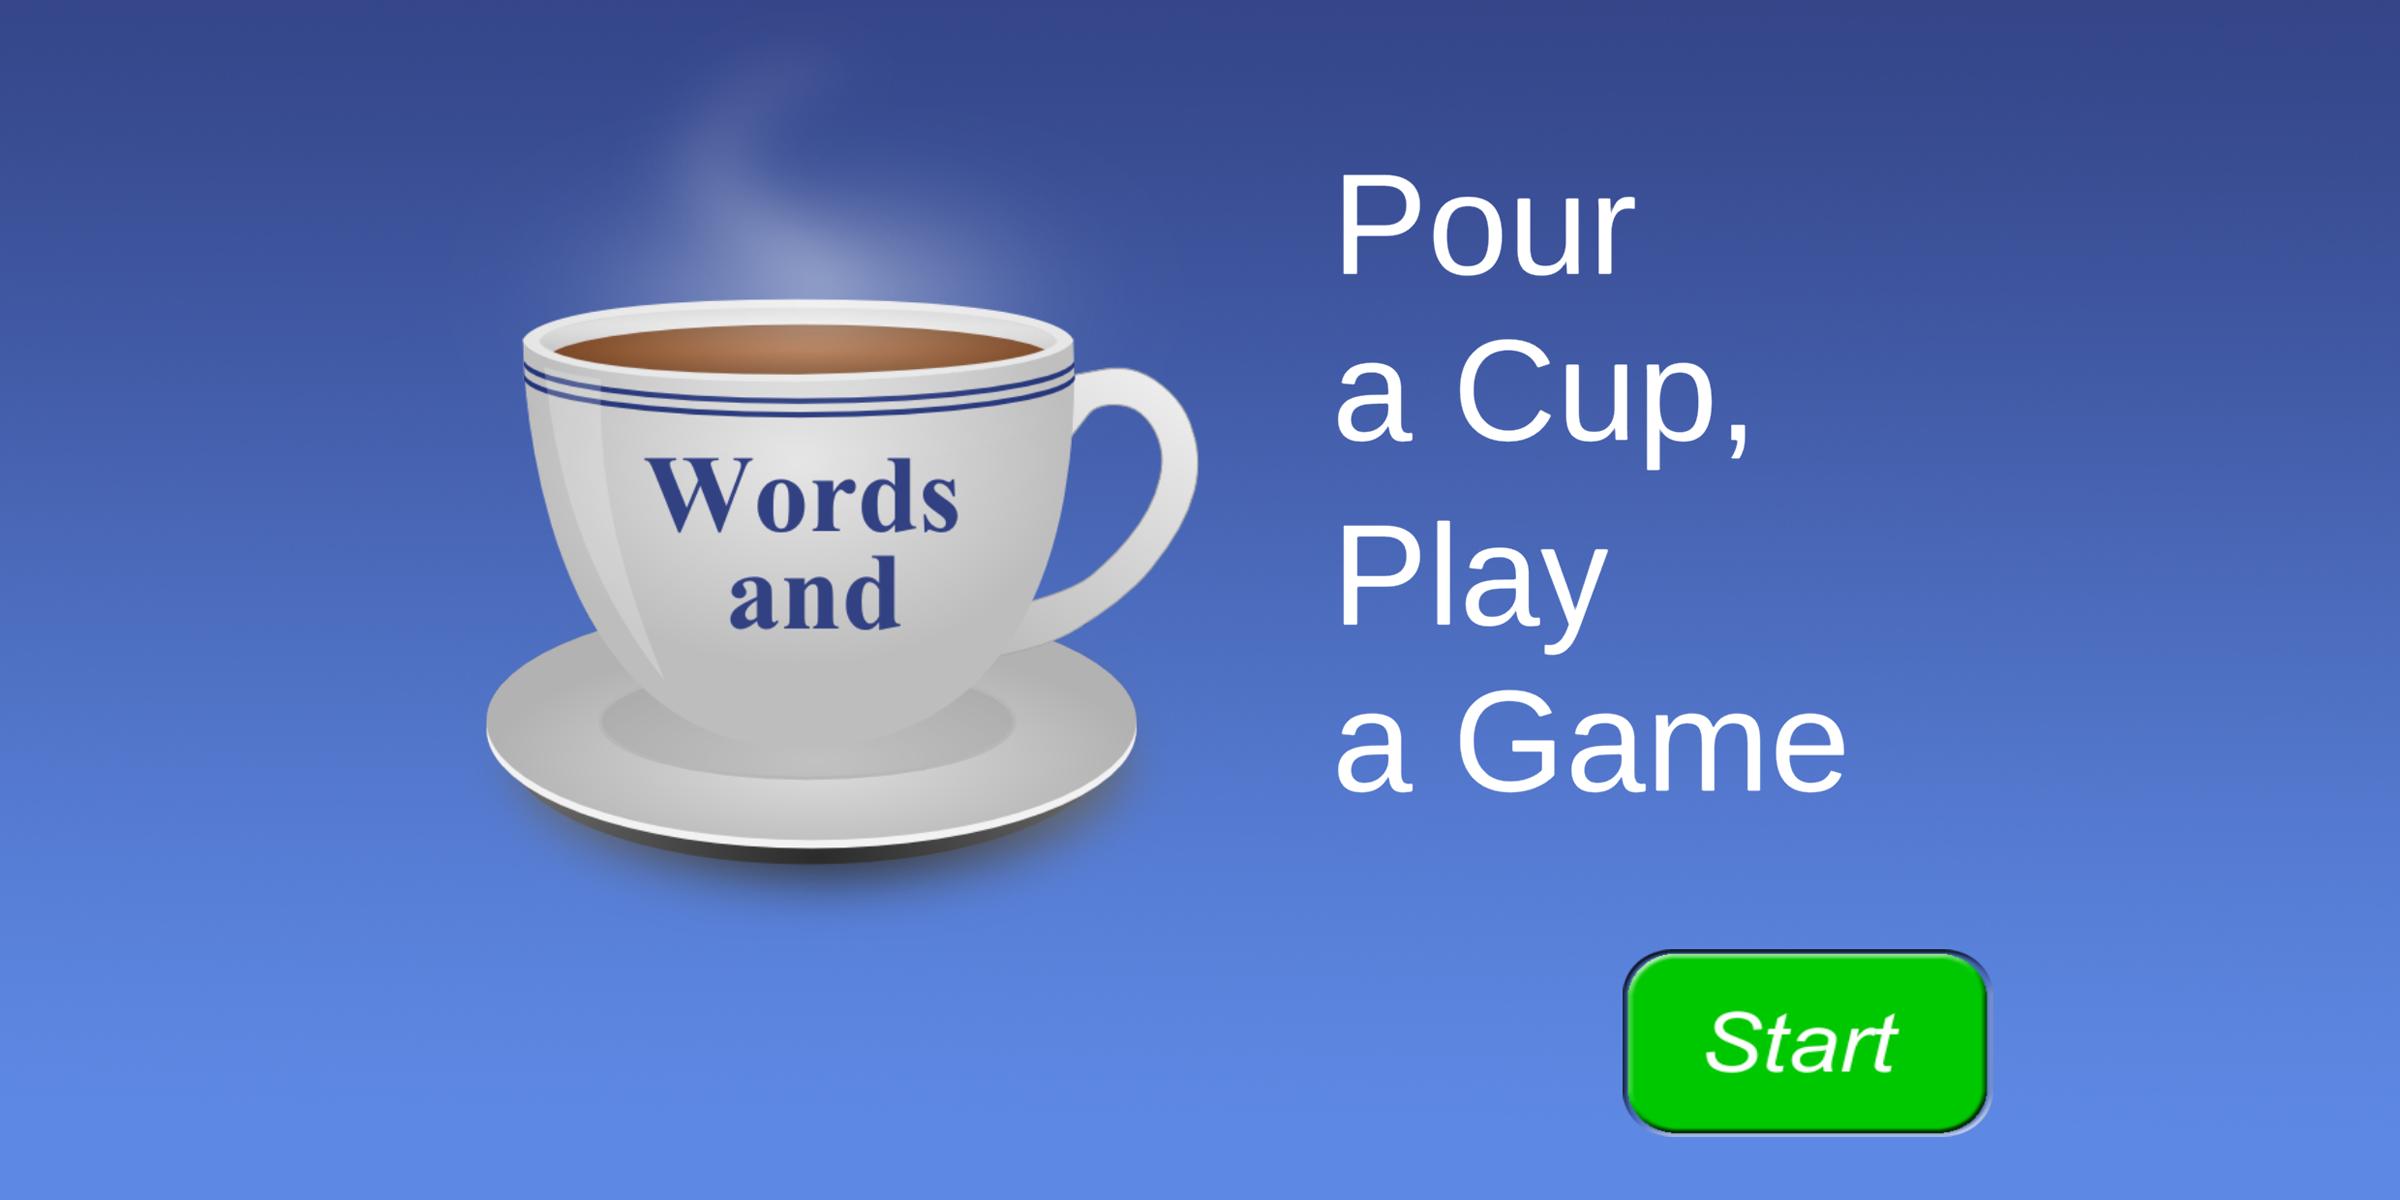 Words and Coffee 5 Screenshot 3